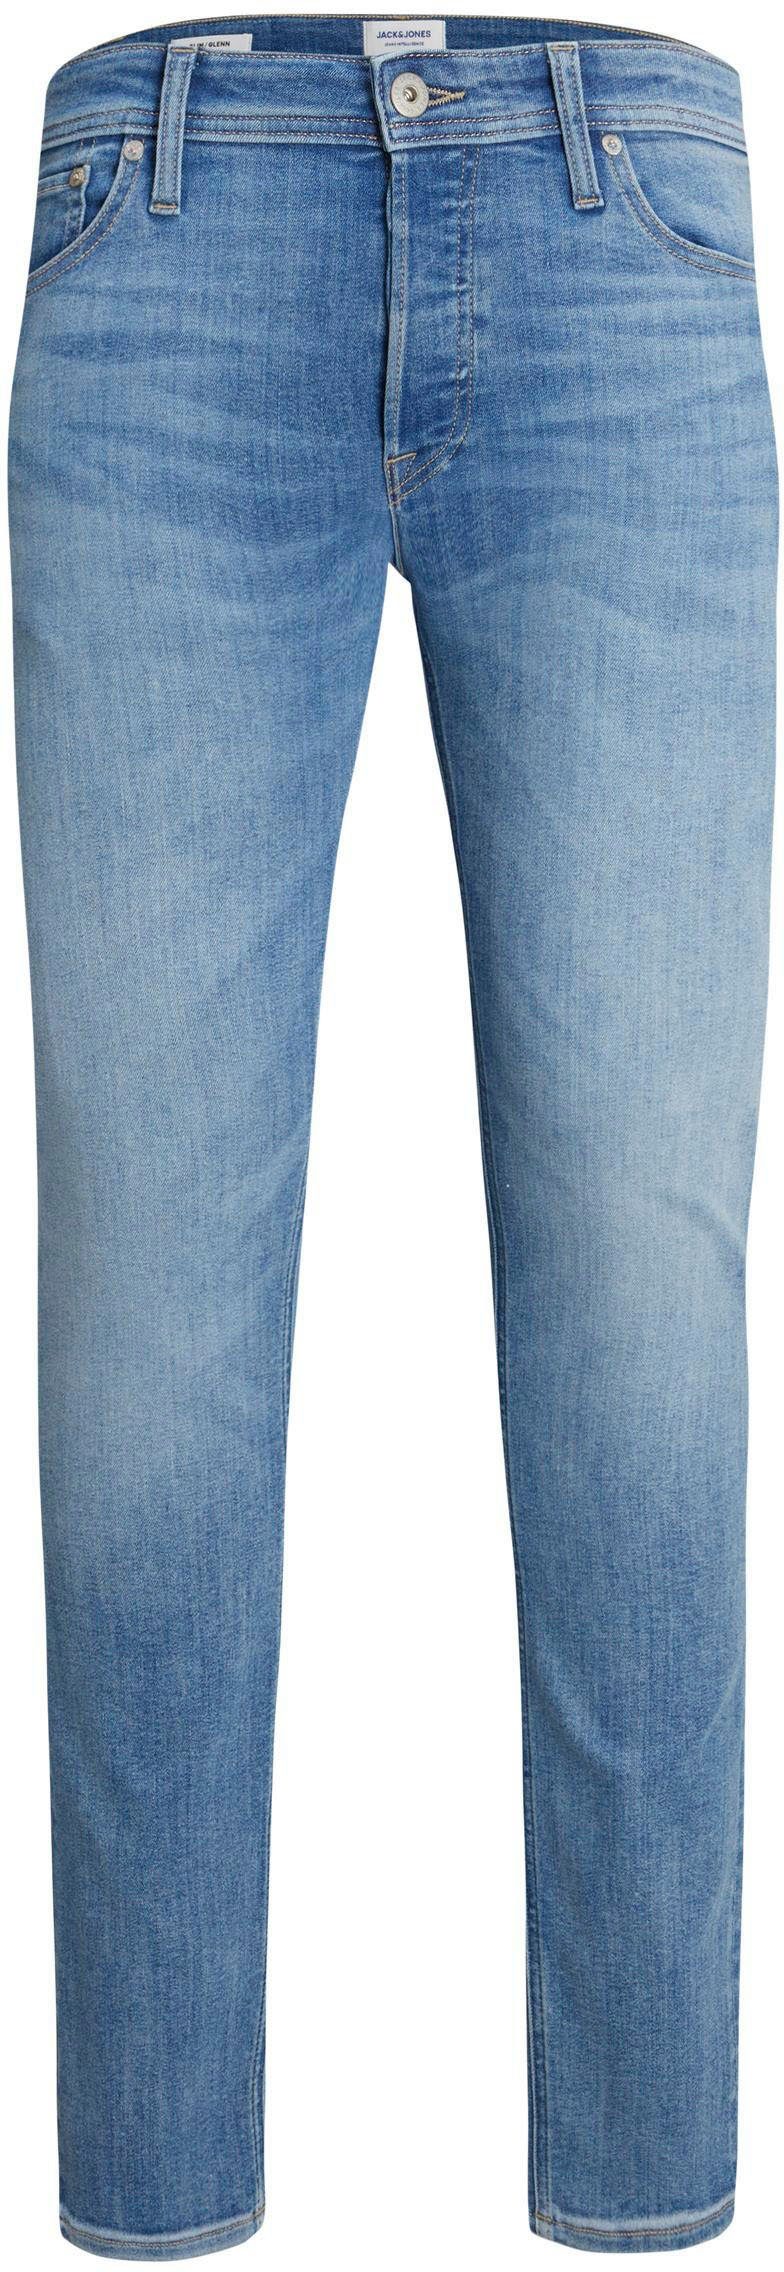 Jack & Jones Skinny-fit-Jeans 314 JJILIAM JJORIGINAL GE light-blue-denim